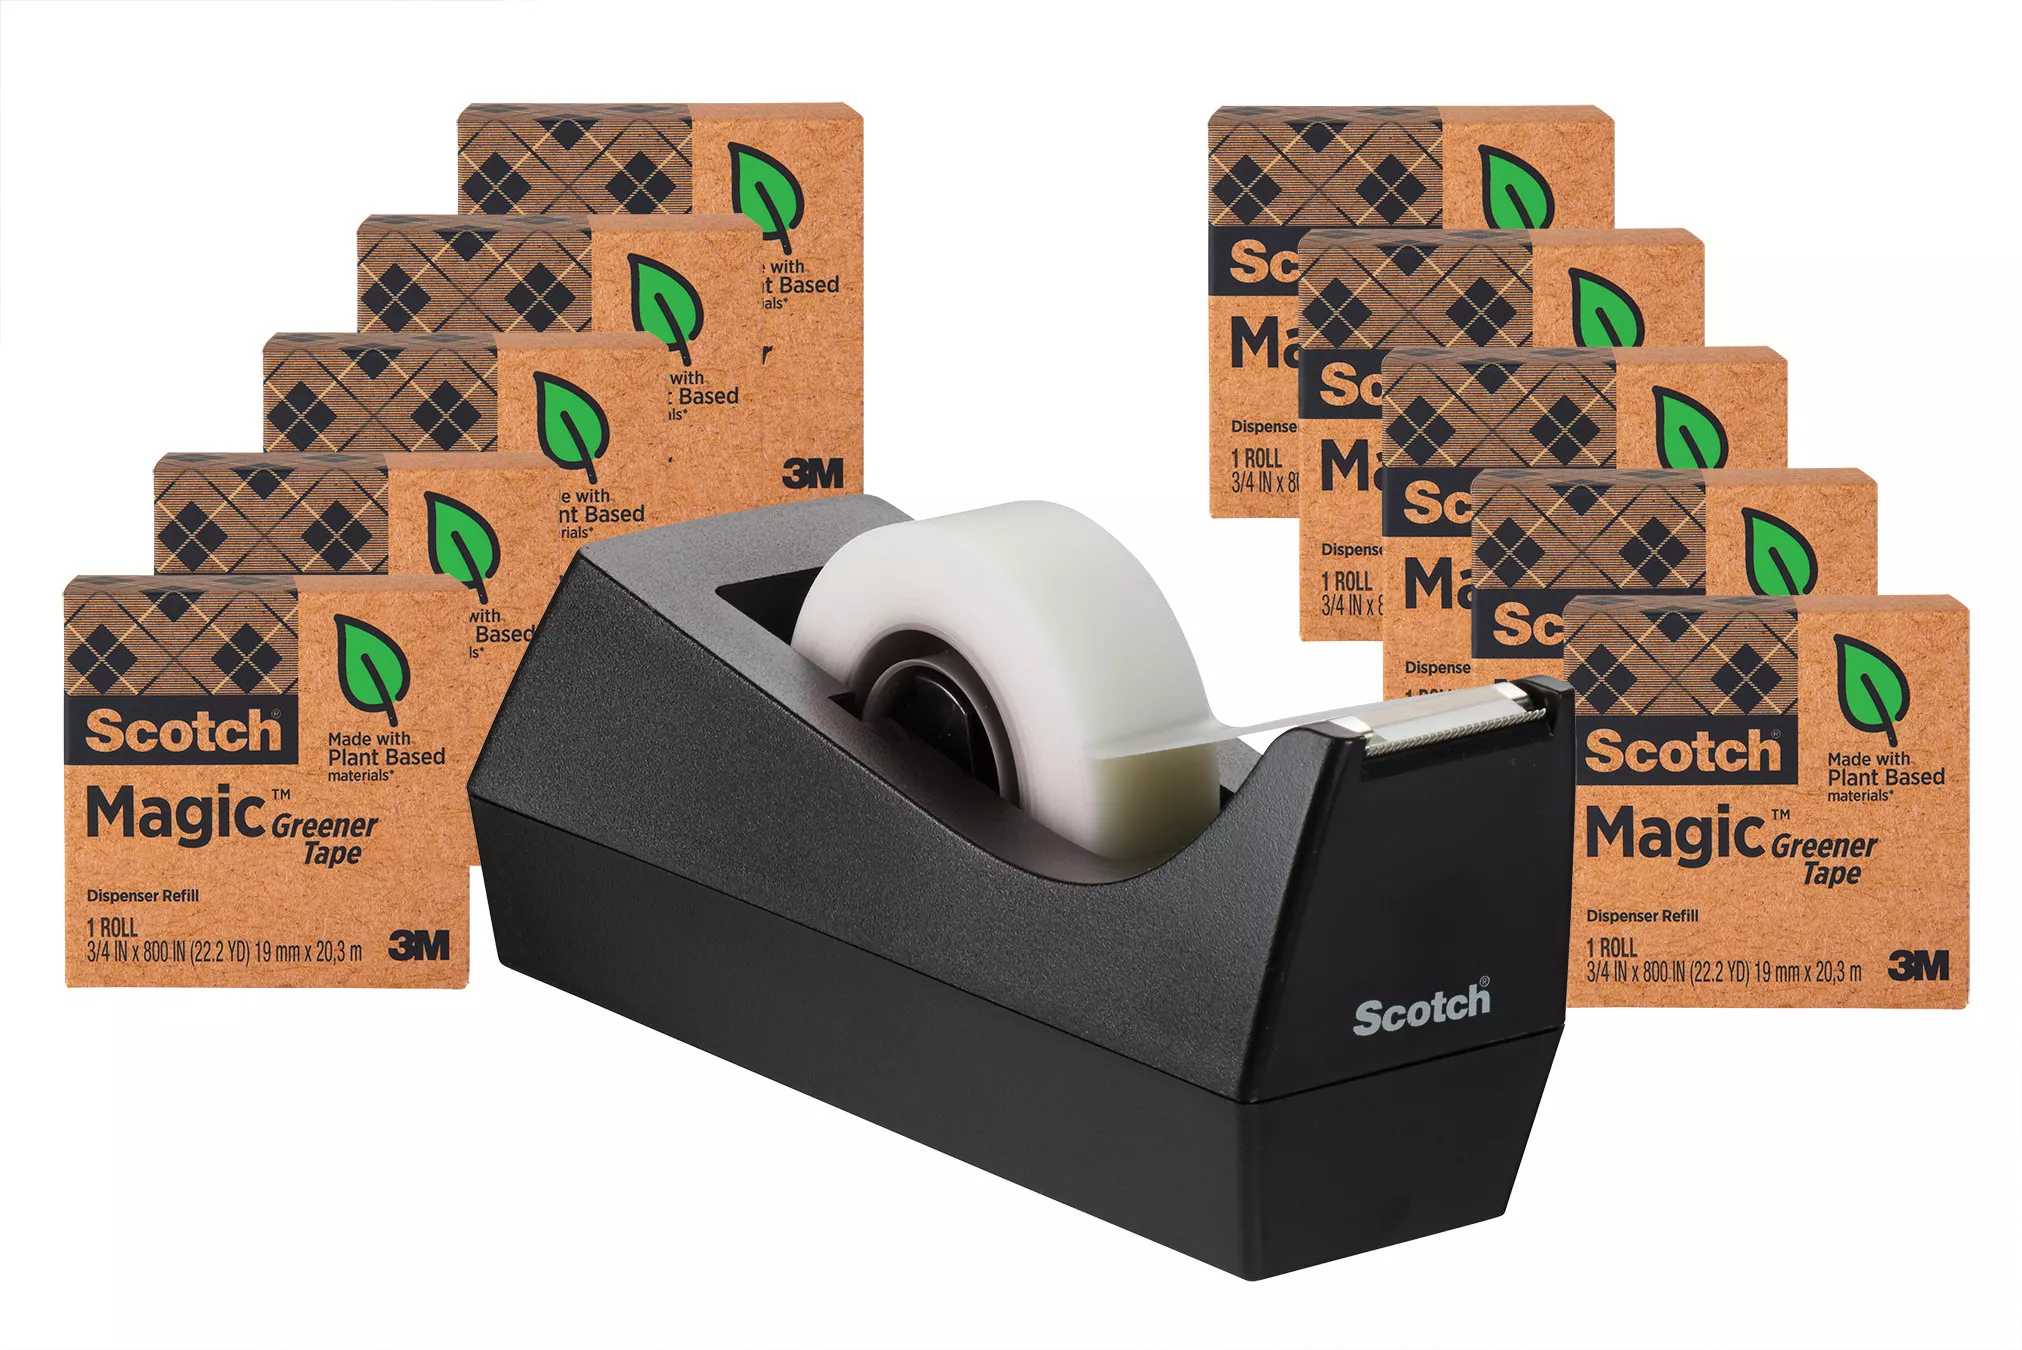 Scotch® Magic™ Greener Tape with Dispenser 812-10P-C38, 3/4 in x 900 in
(19 mm x 22,8 m), 10-Pack with Tape Dispenser